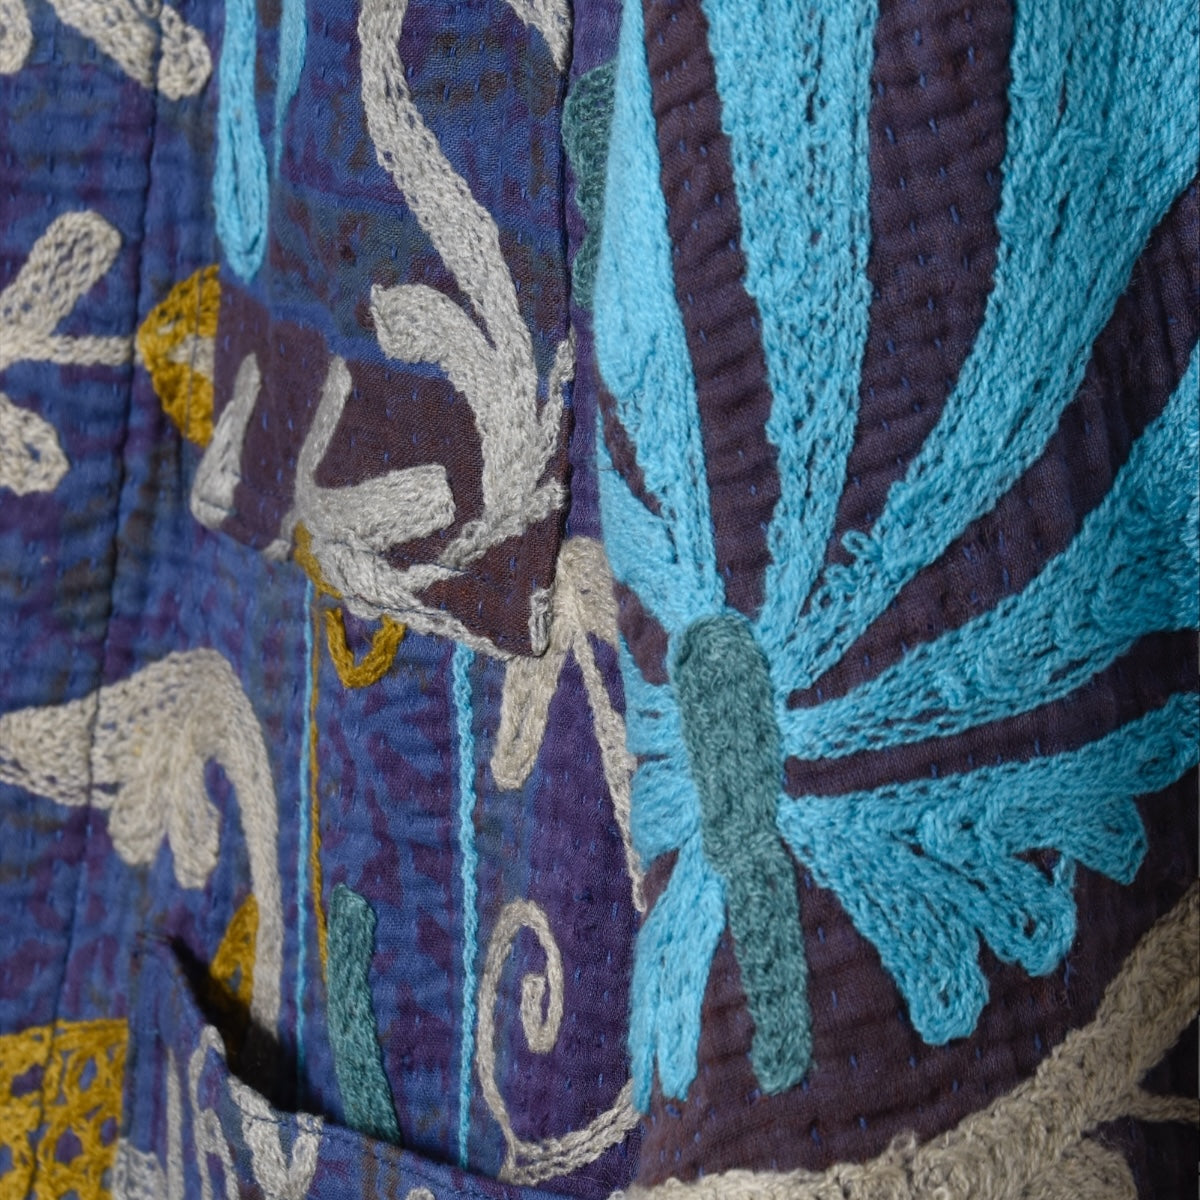 Kardo Bodhi Jacket Embroidered Cotton Kantha Blanket lilac blue